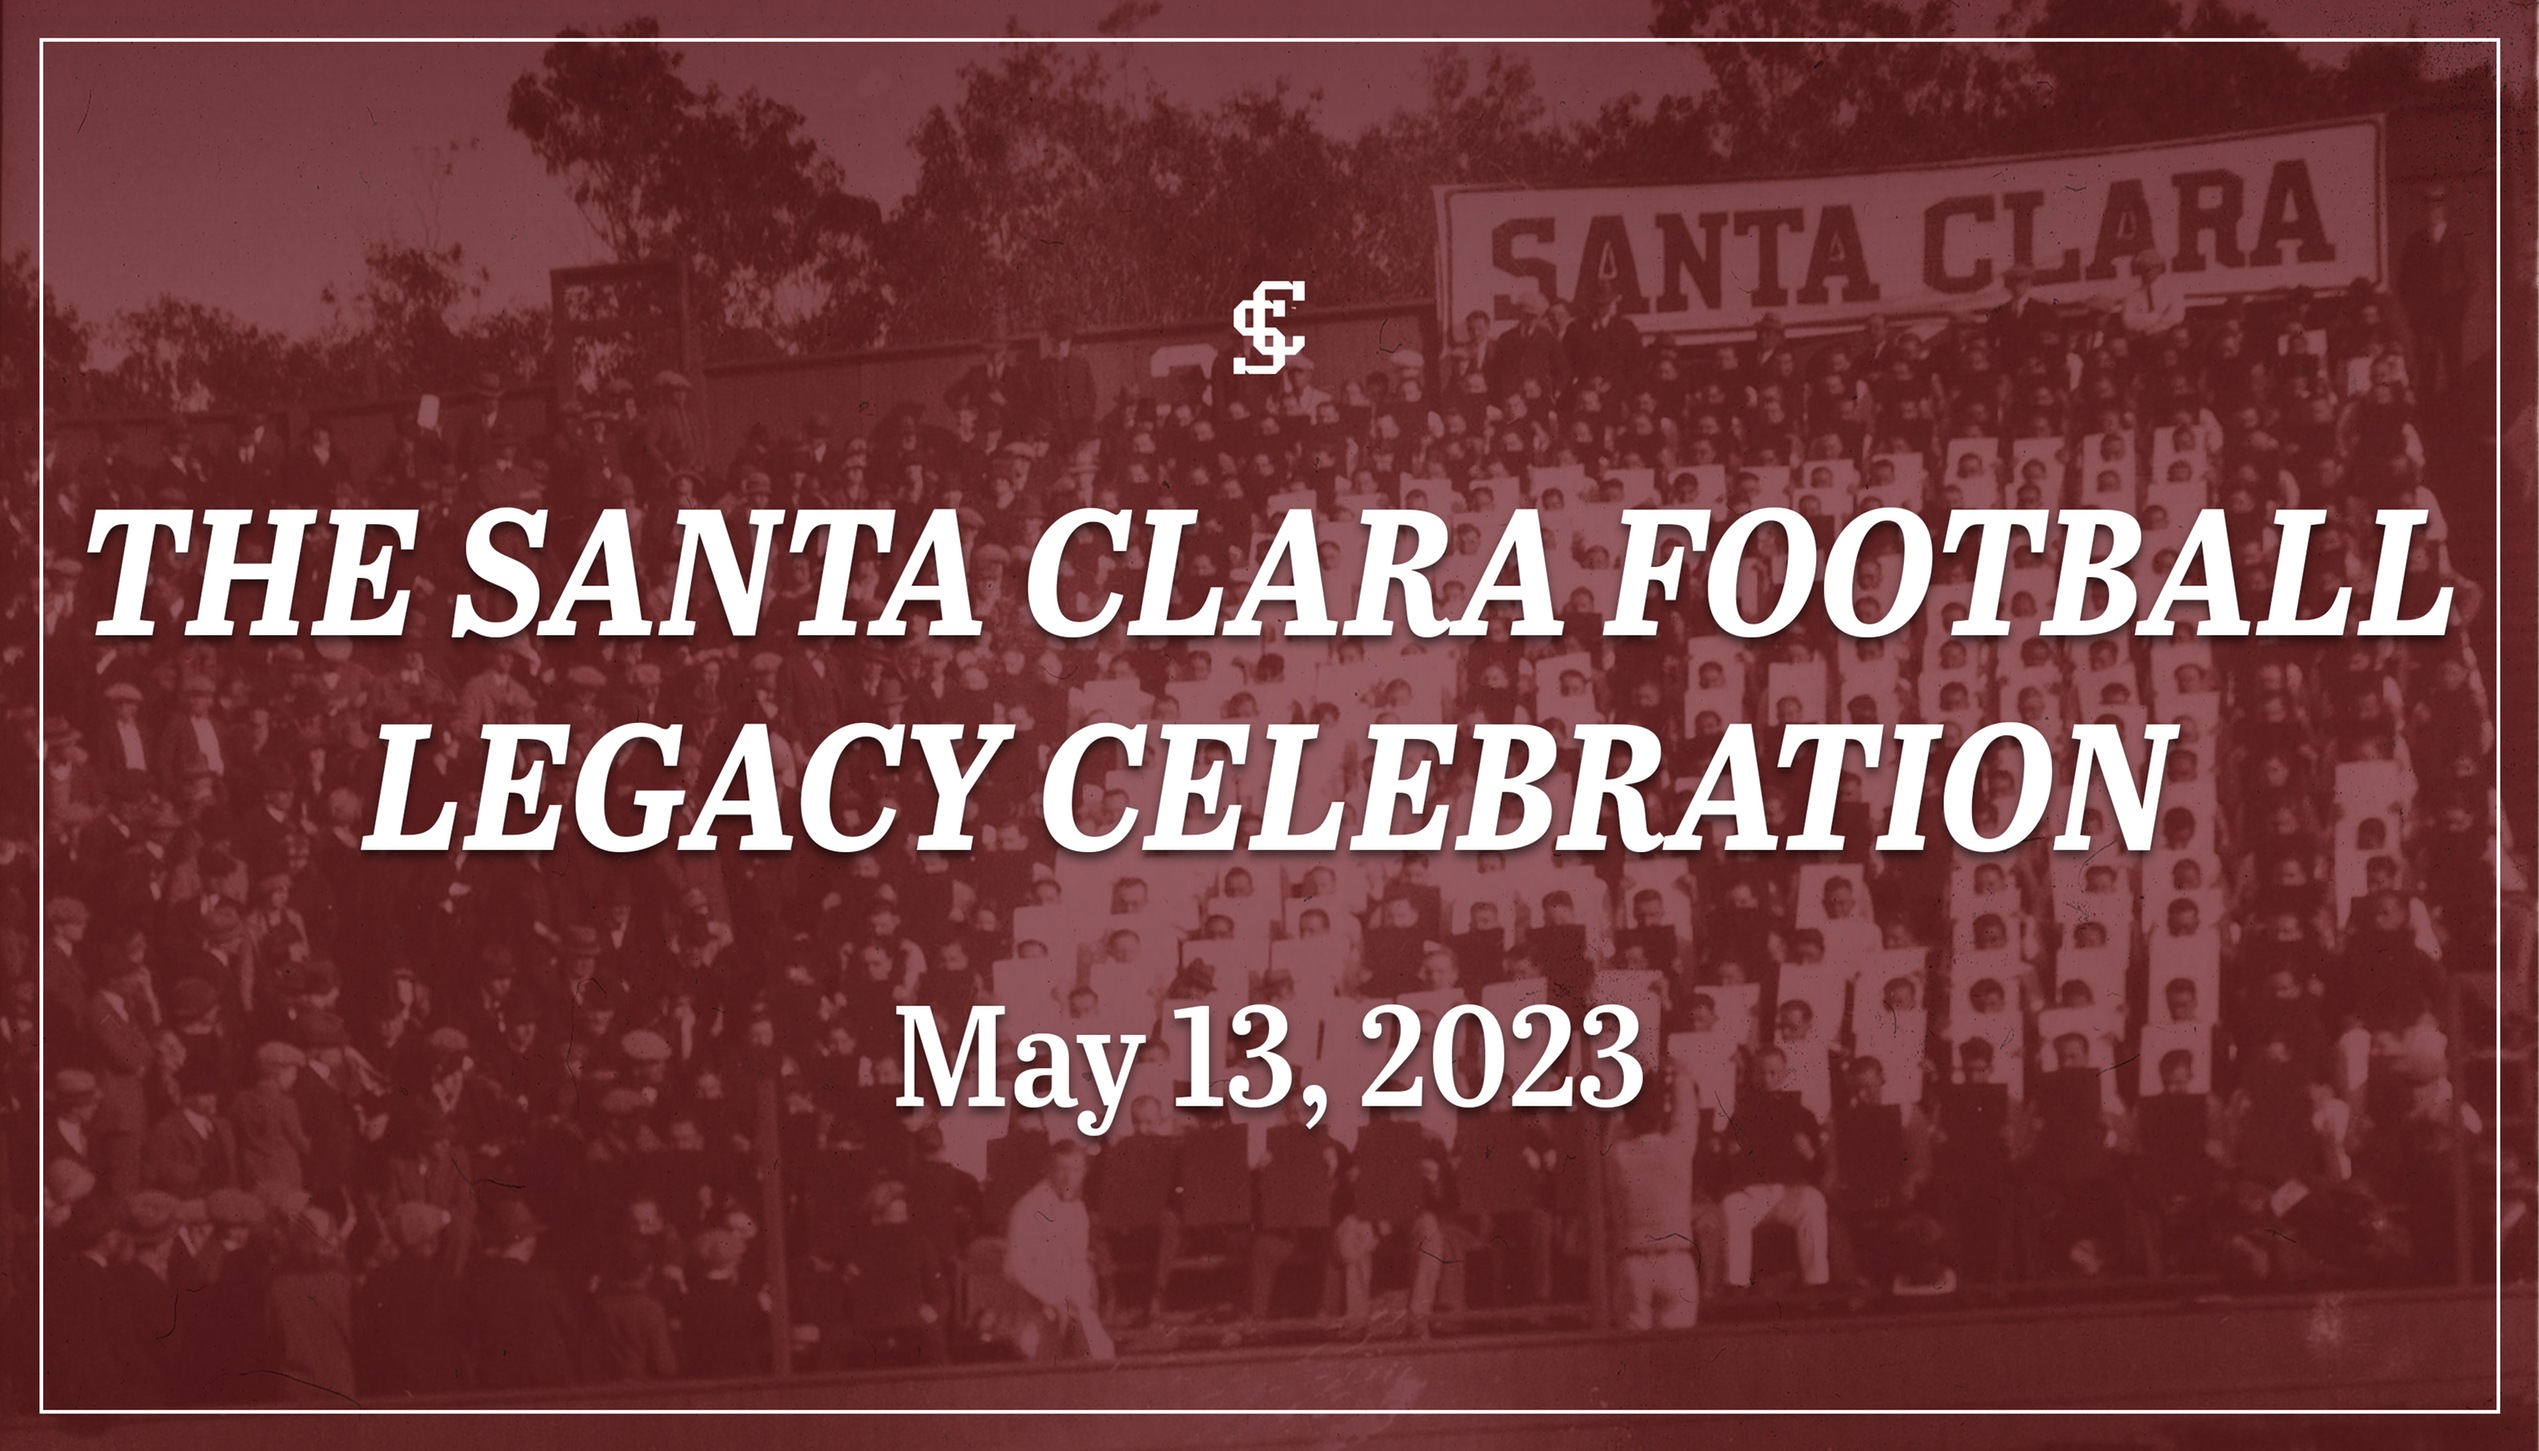 Santa Clara Football Legacy Celebration Set For May 13